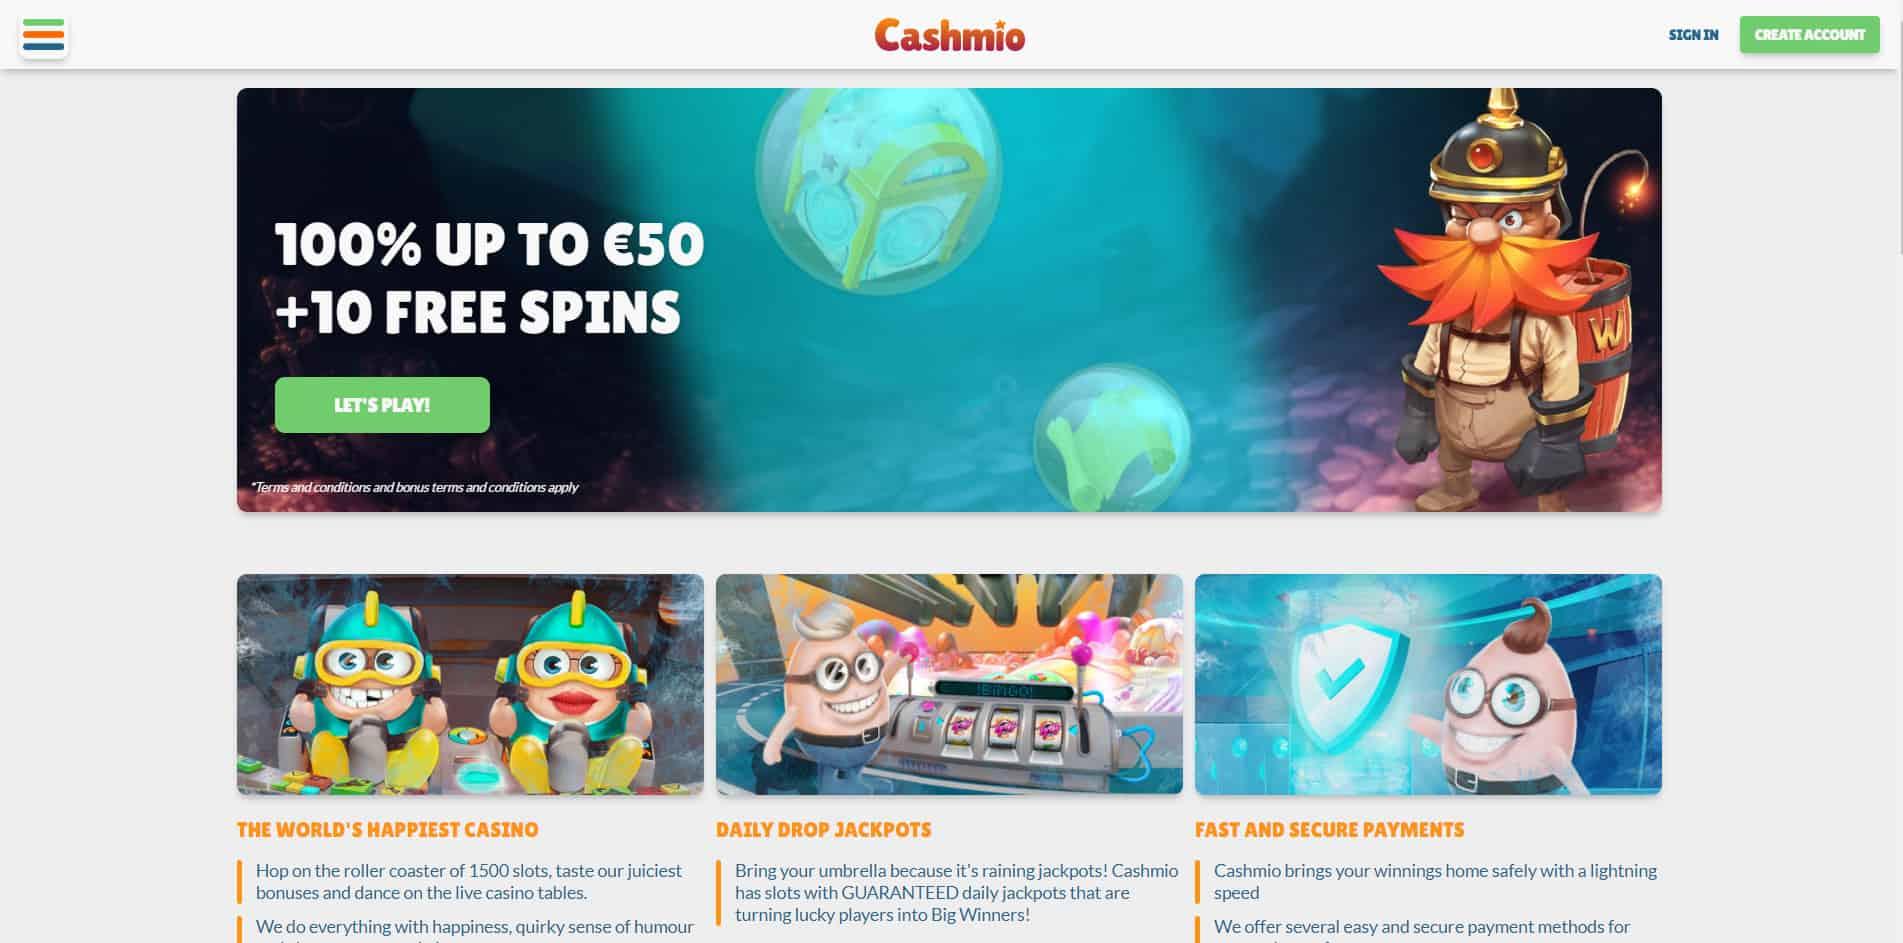 Cashmio casino homepage